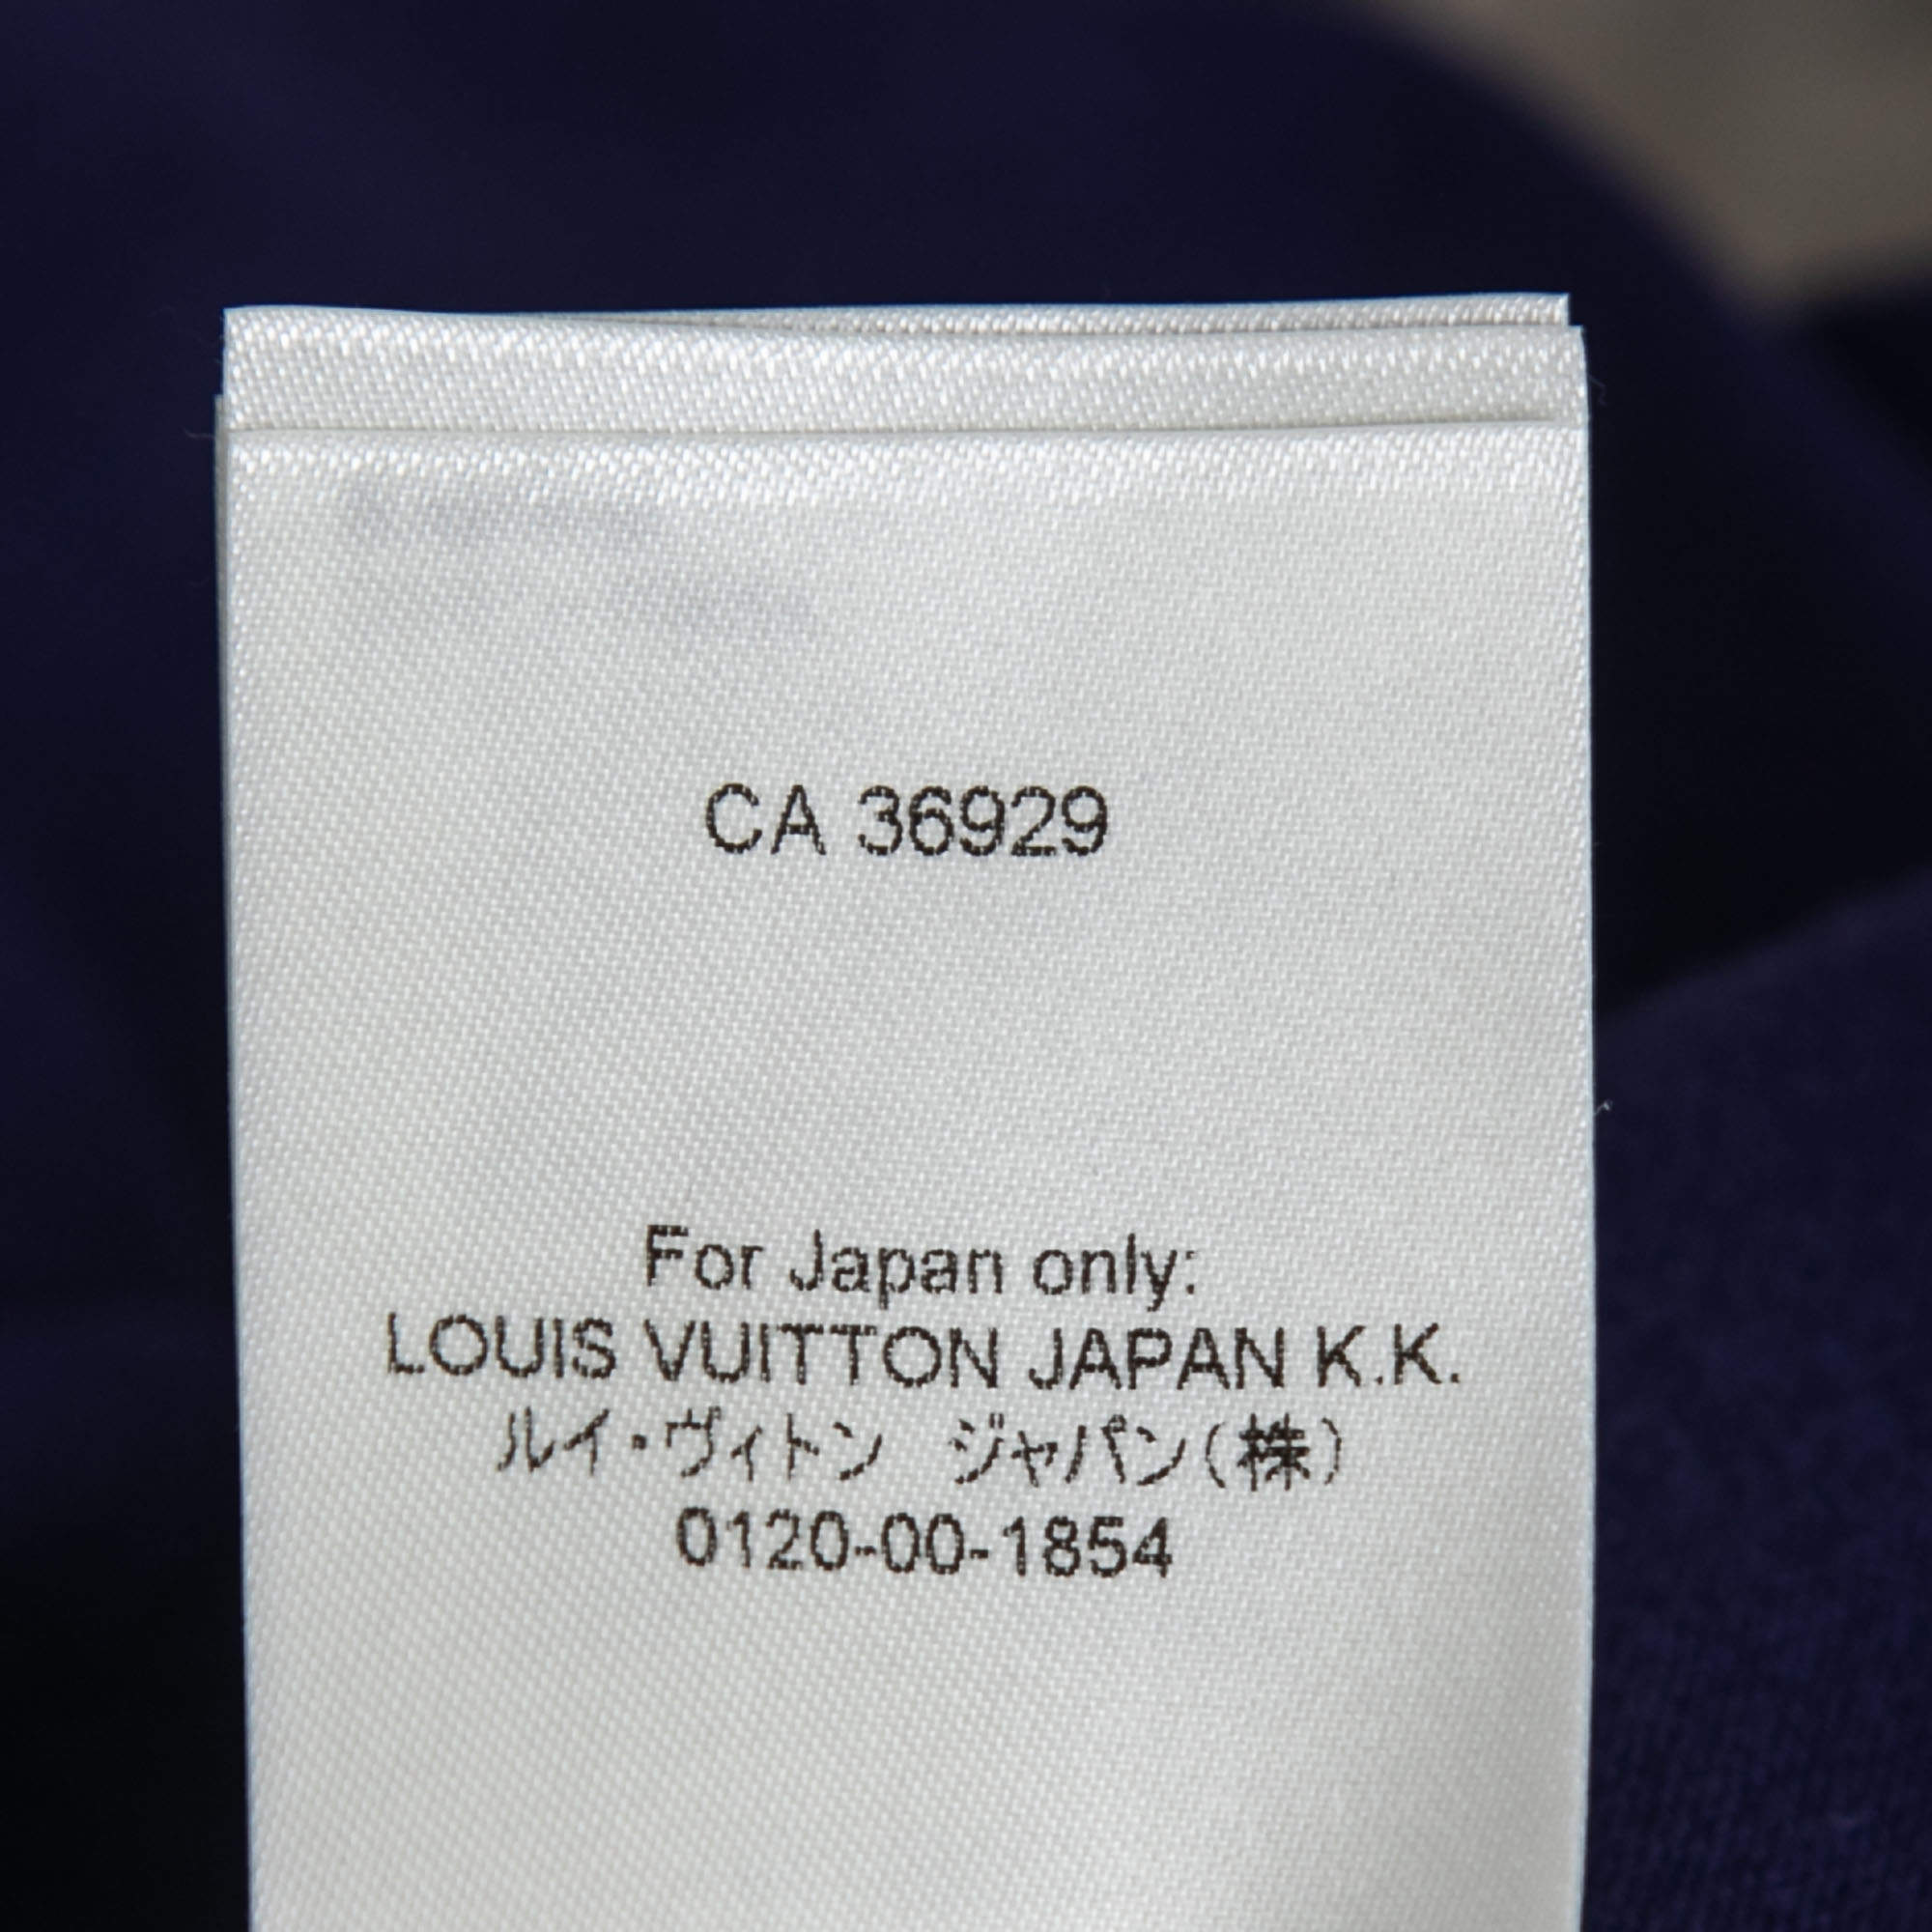 Louis Vuitton Blue Graphic Logo Print Cotton T-Shirt XL Louis Vuitton